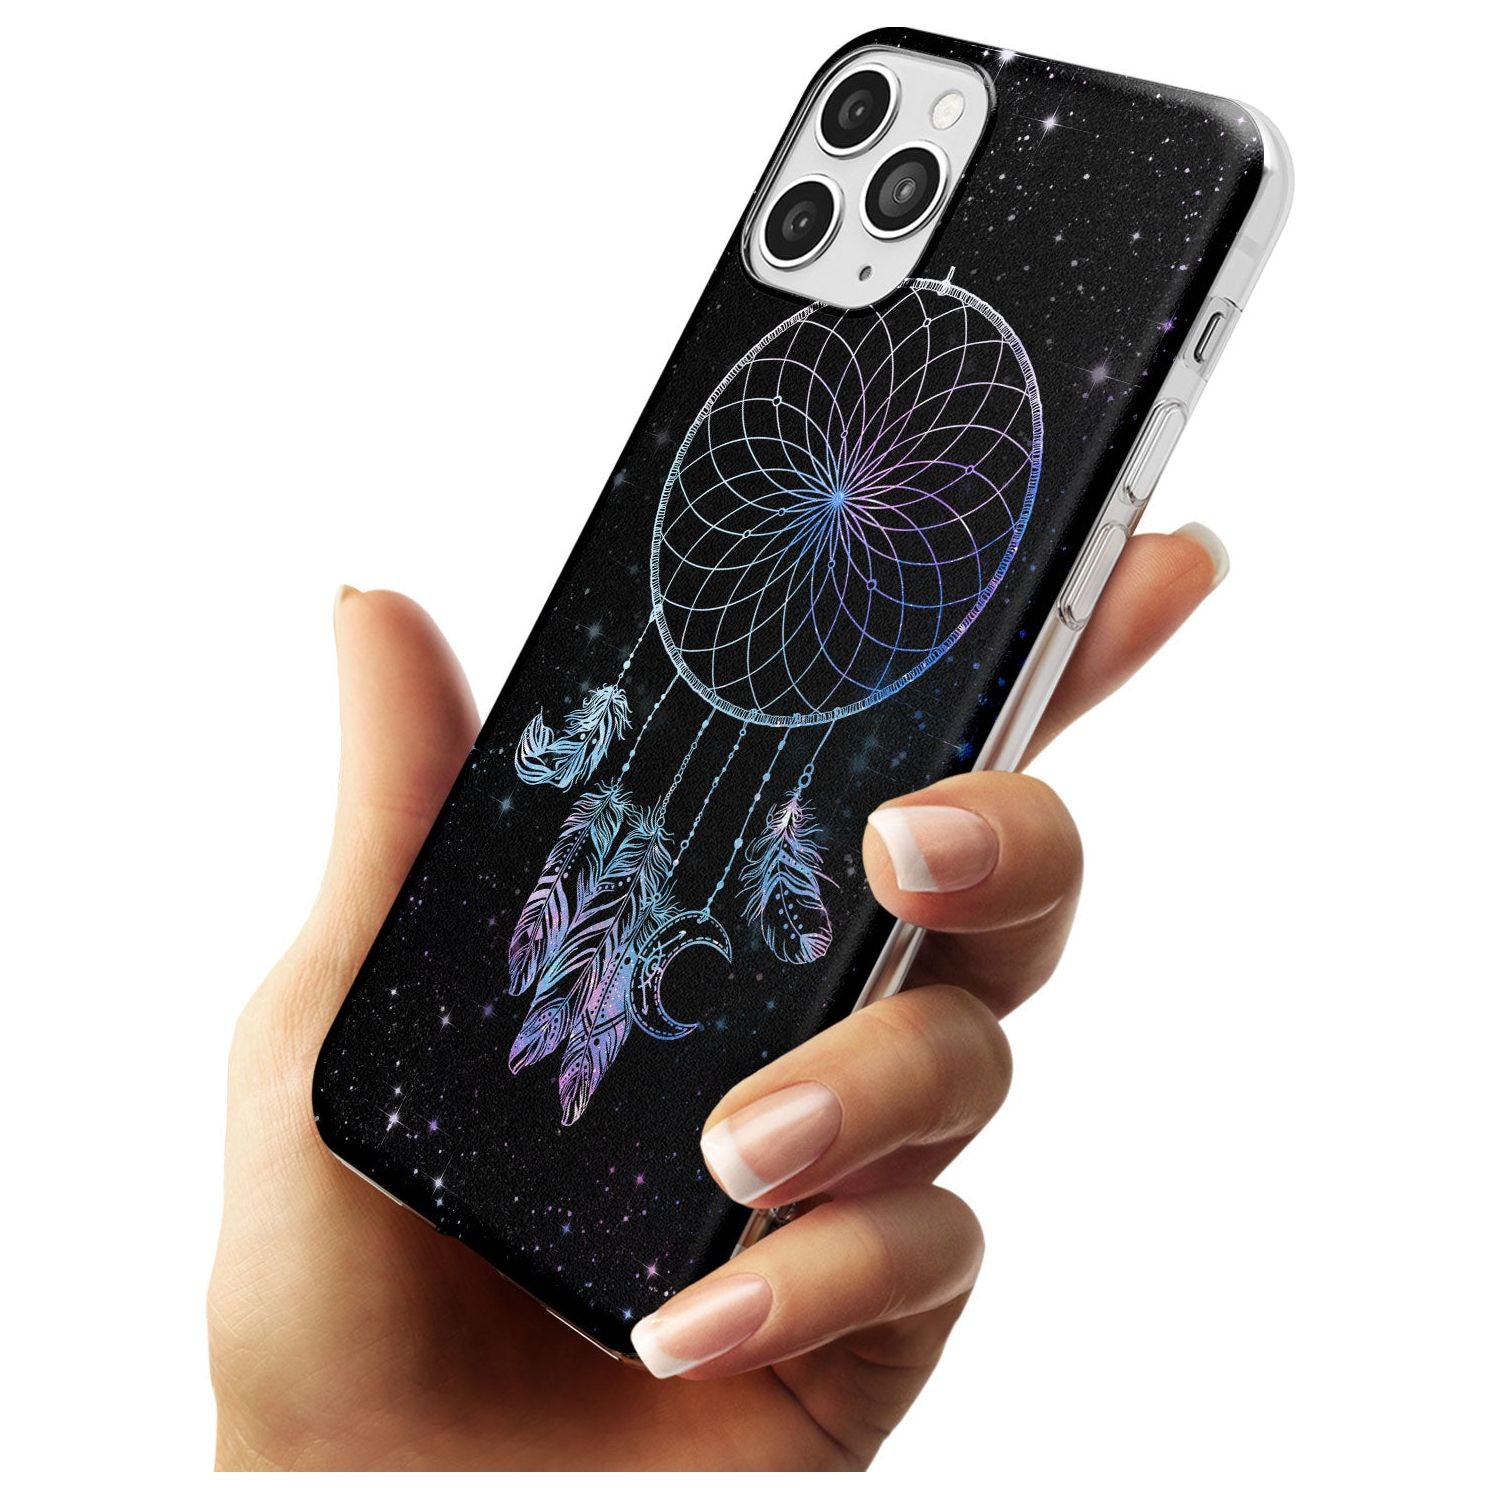 Dreamcatcher Space Stars Galaxy Print Slim TPU Phone Case for iPhone 11 Pro Max